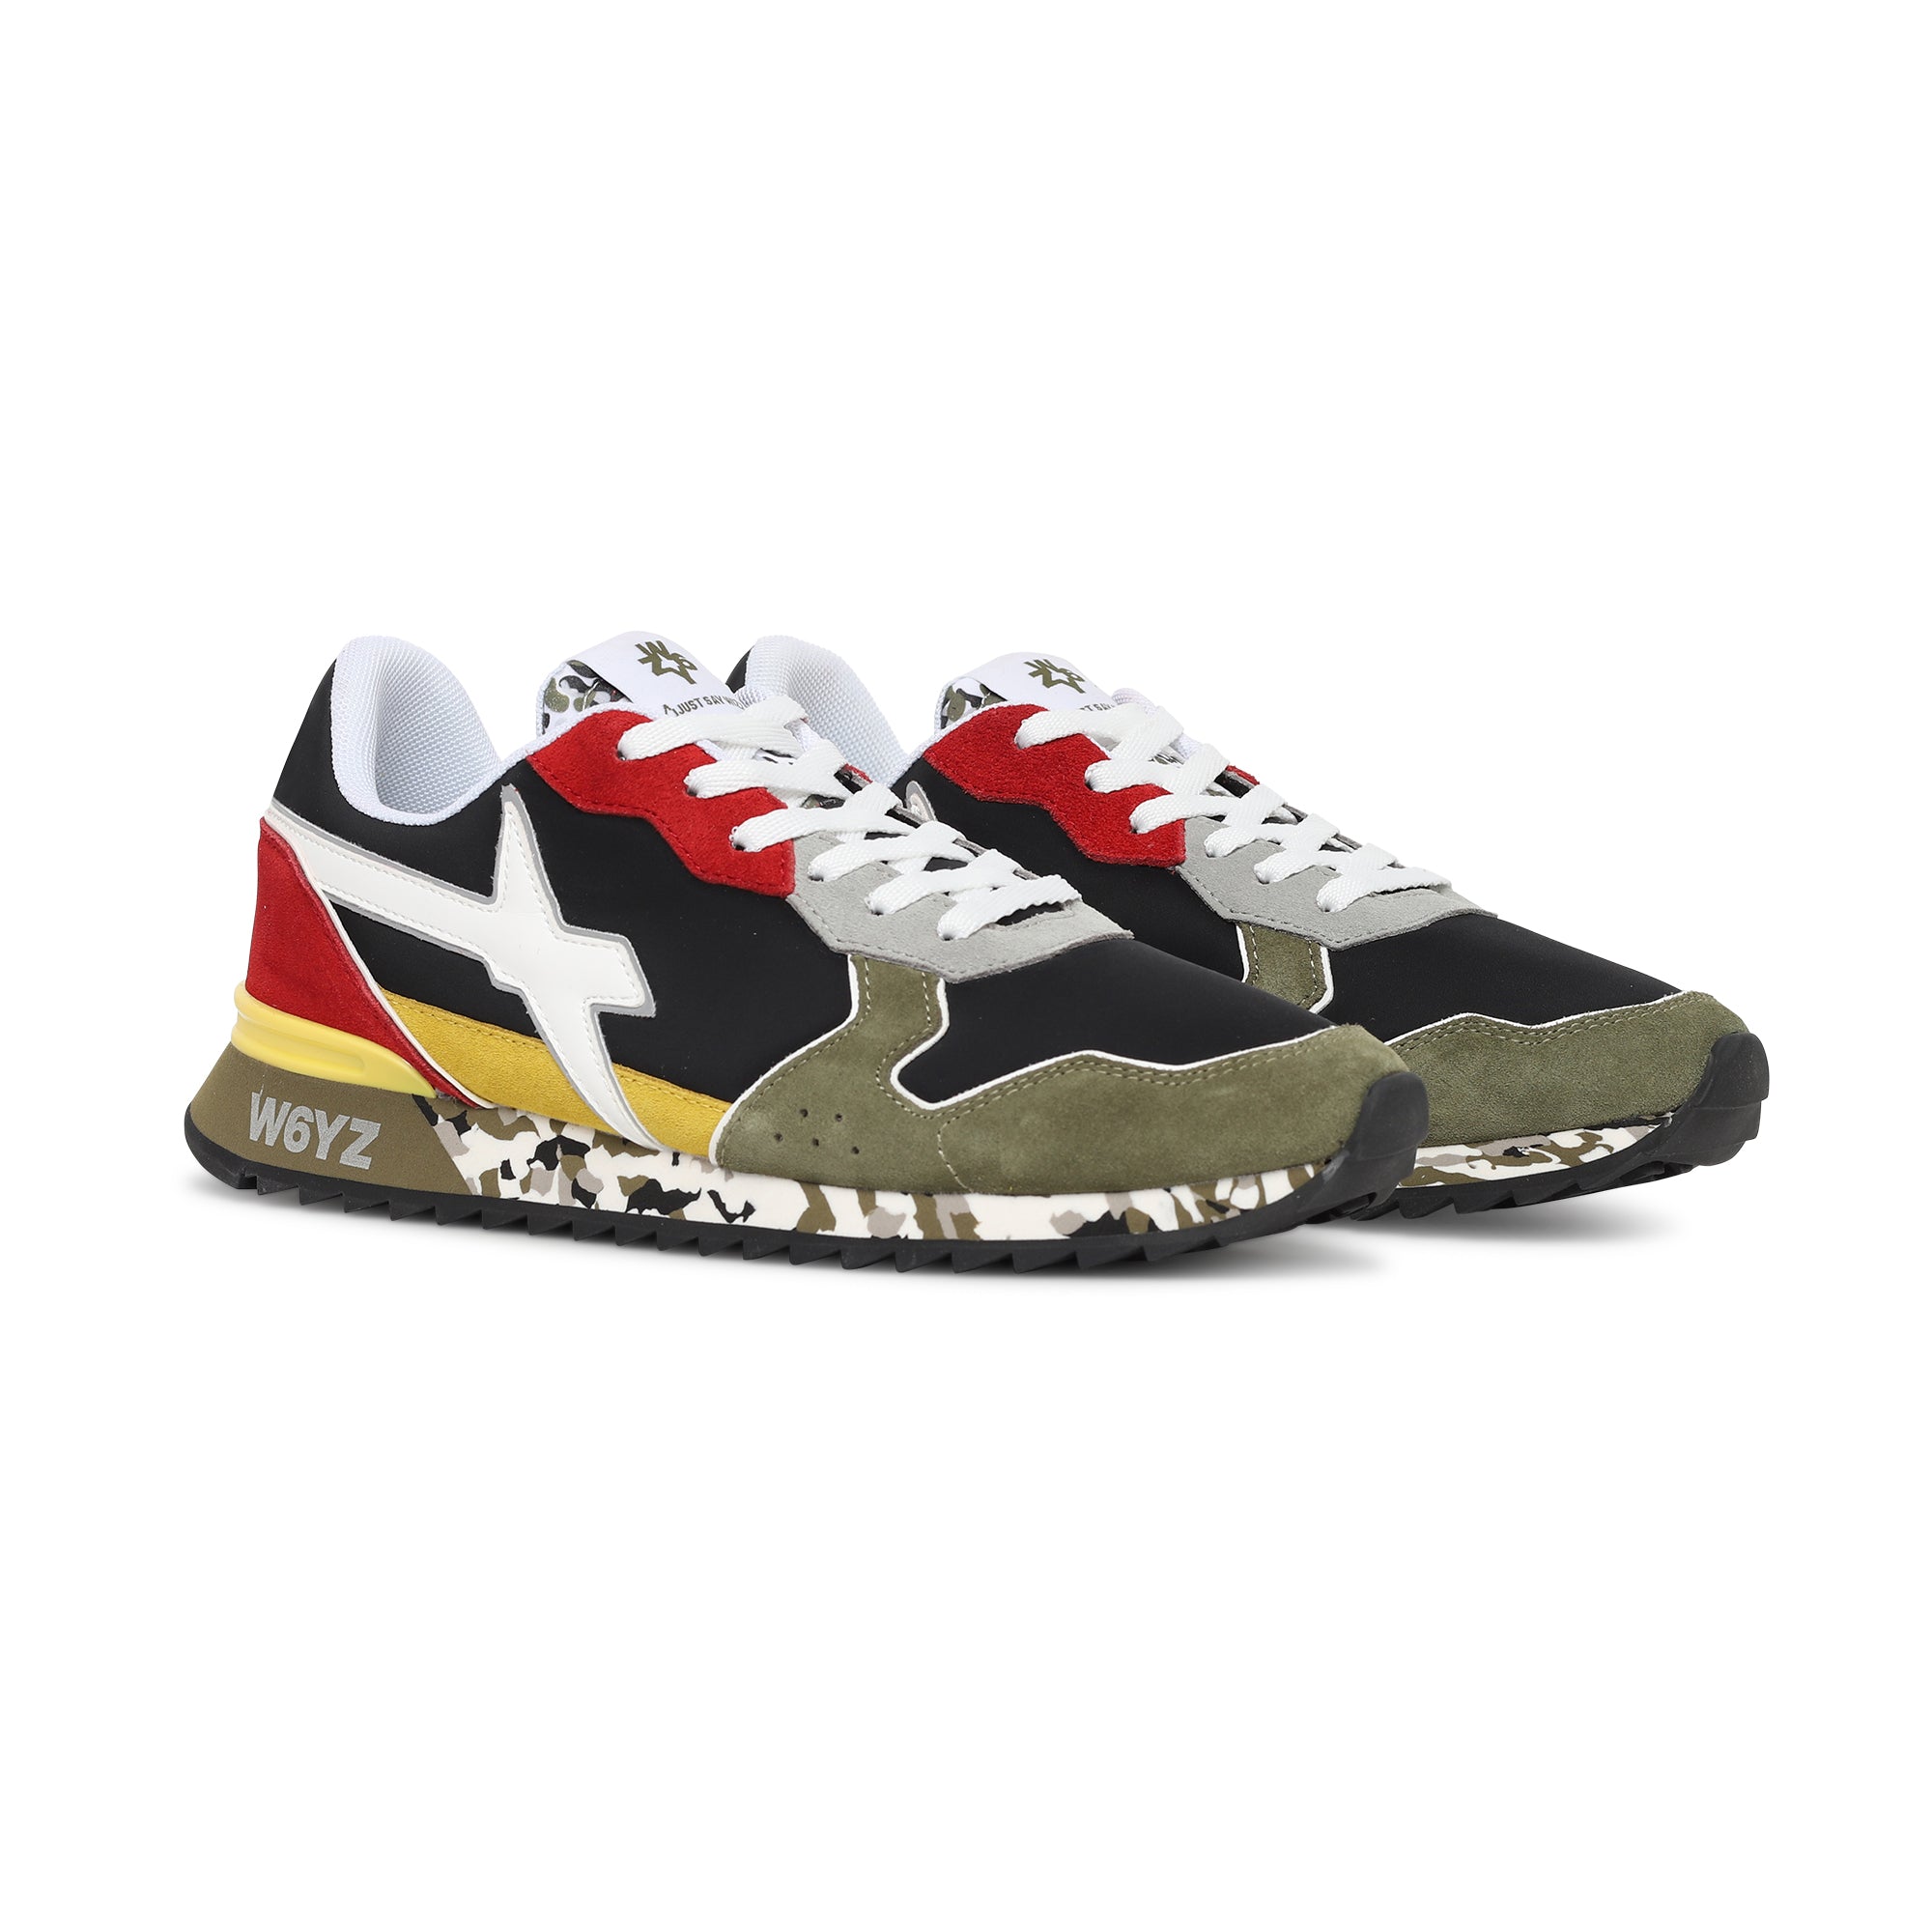 Sneaker w6yz  militare-black-red uomo  - 4